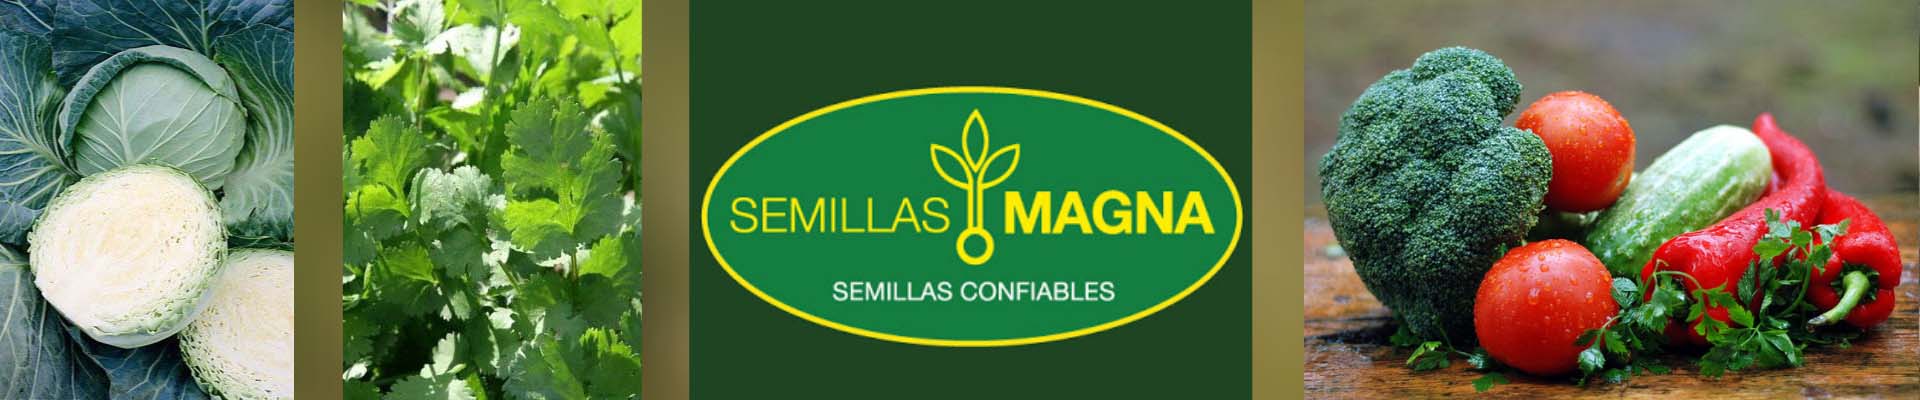 Banner Semillas magna